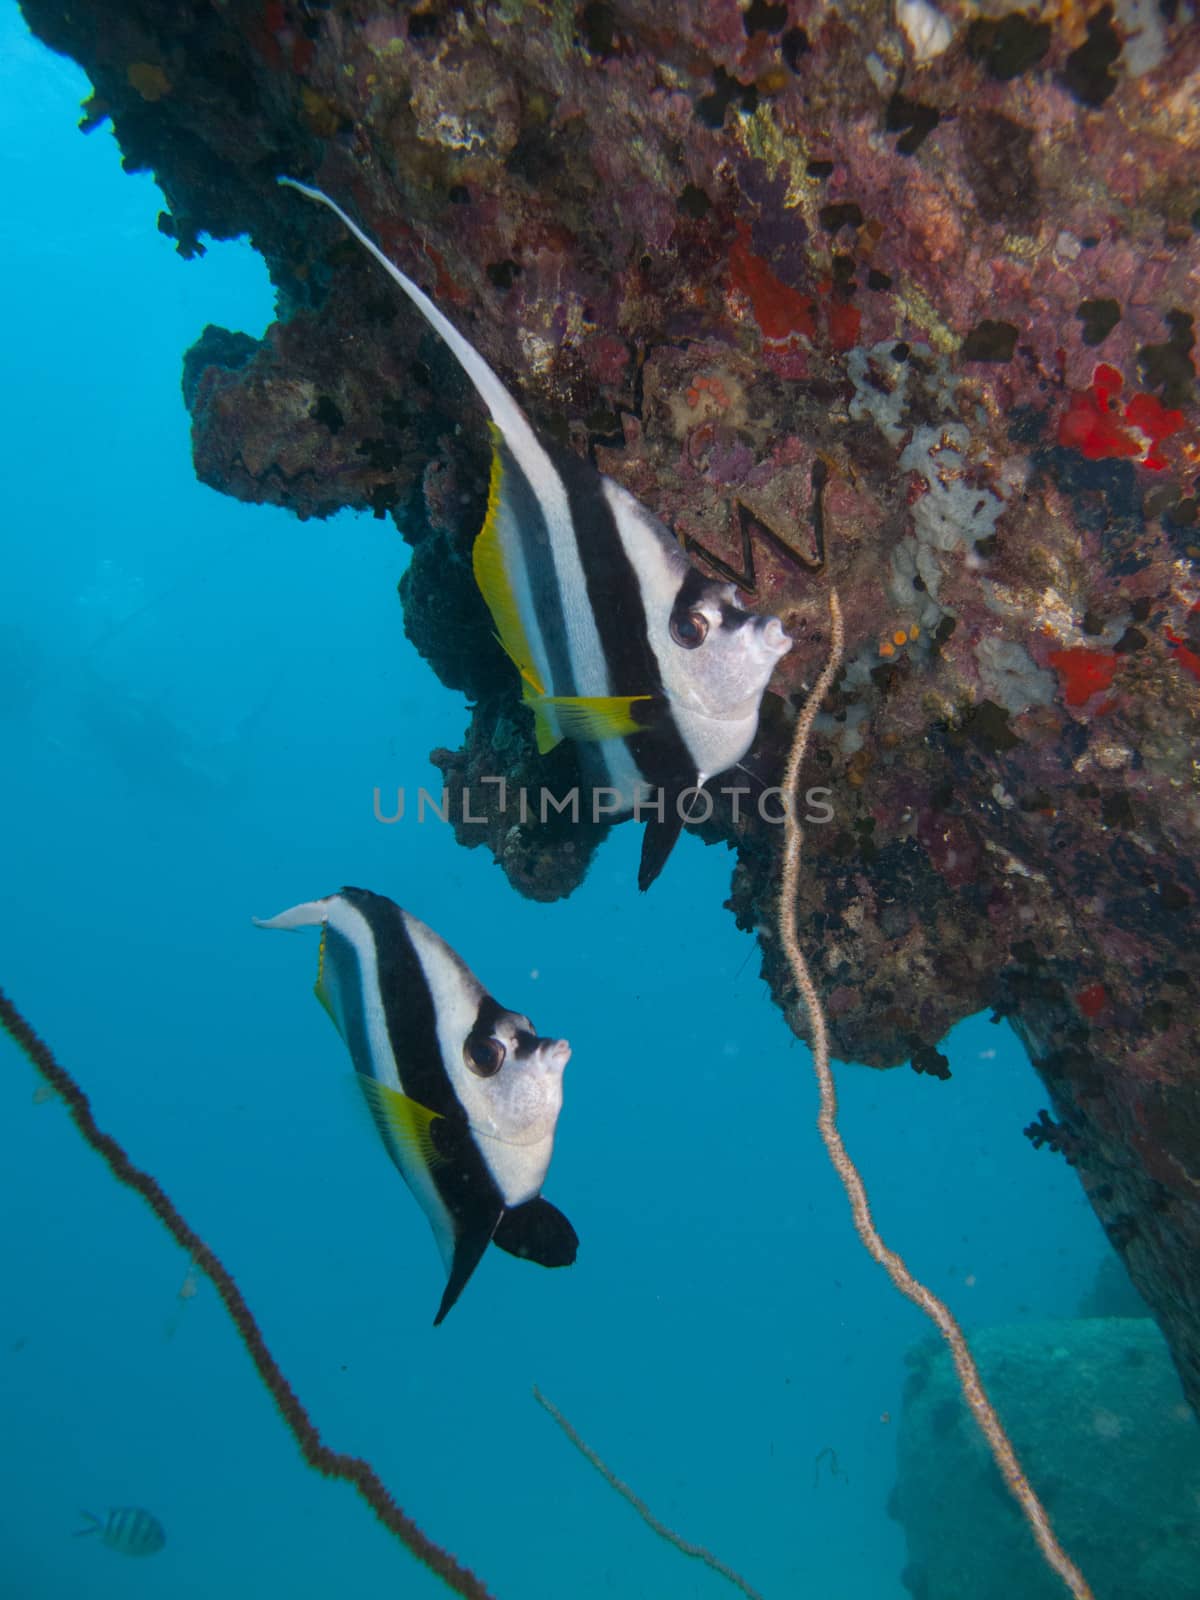 longfin bannerfish under rock by AdrianKaye